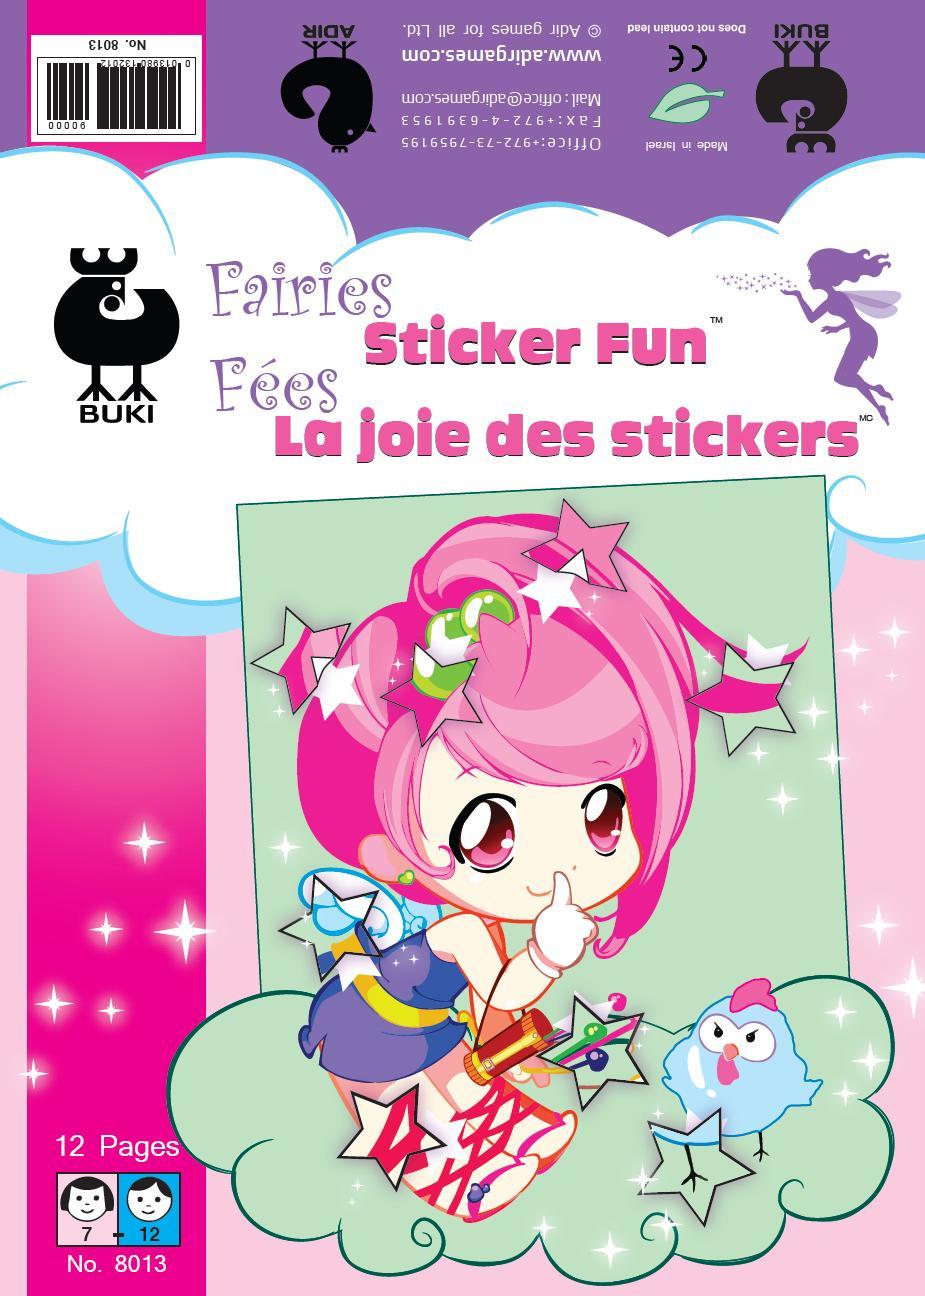 Buki Fairies - Sticker Fun - #HolaNanu#NDIS #creativekids